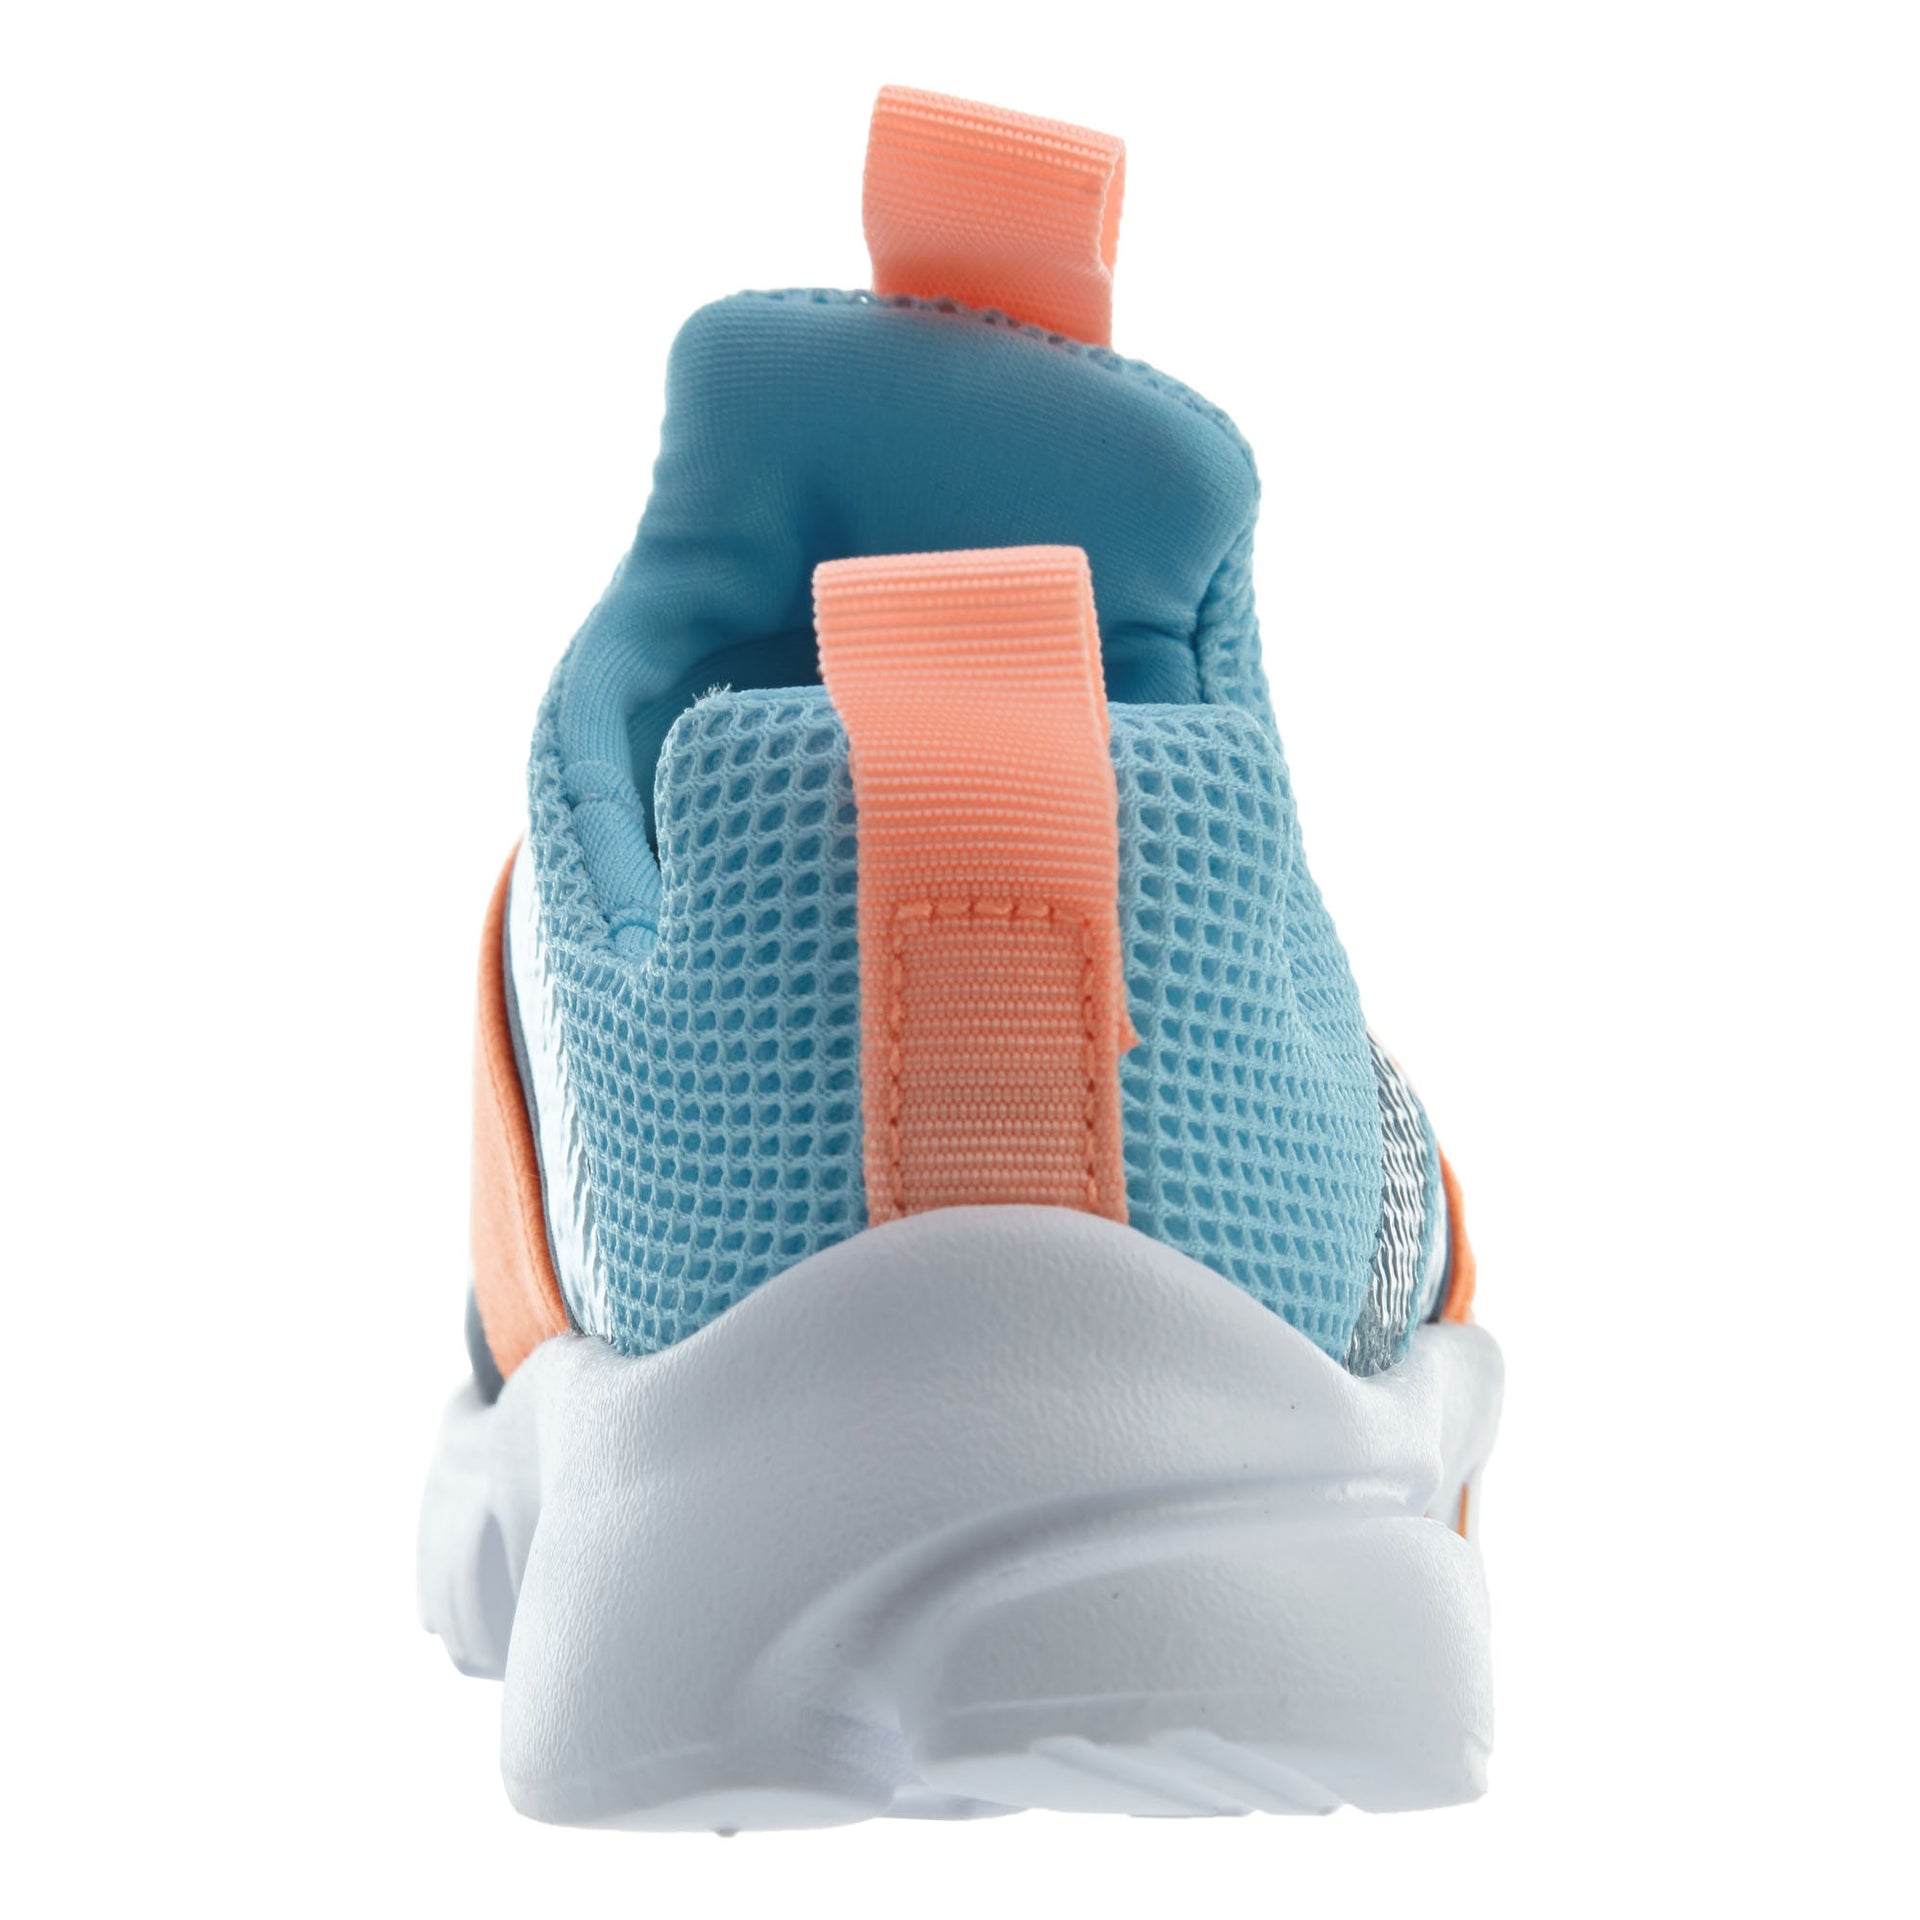 Nike Presto Extreme Toddlers Style : 870021-402